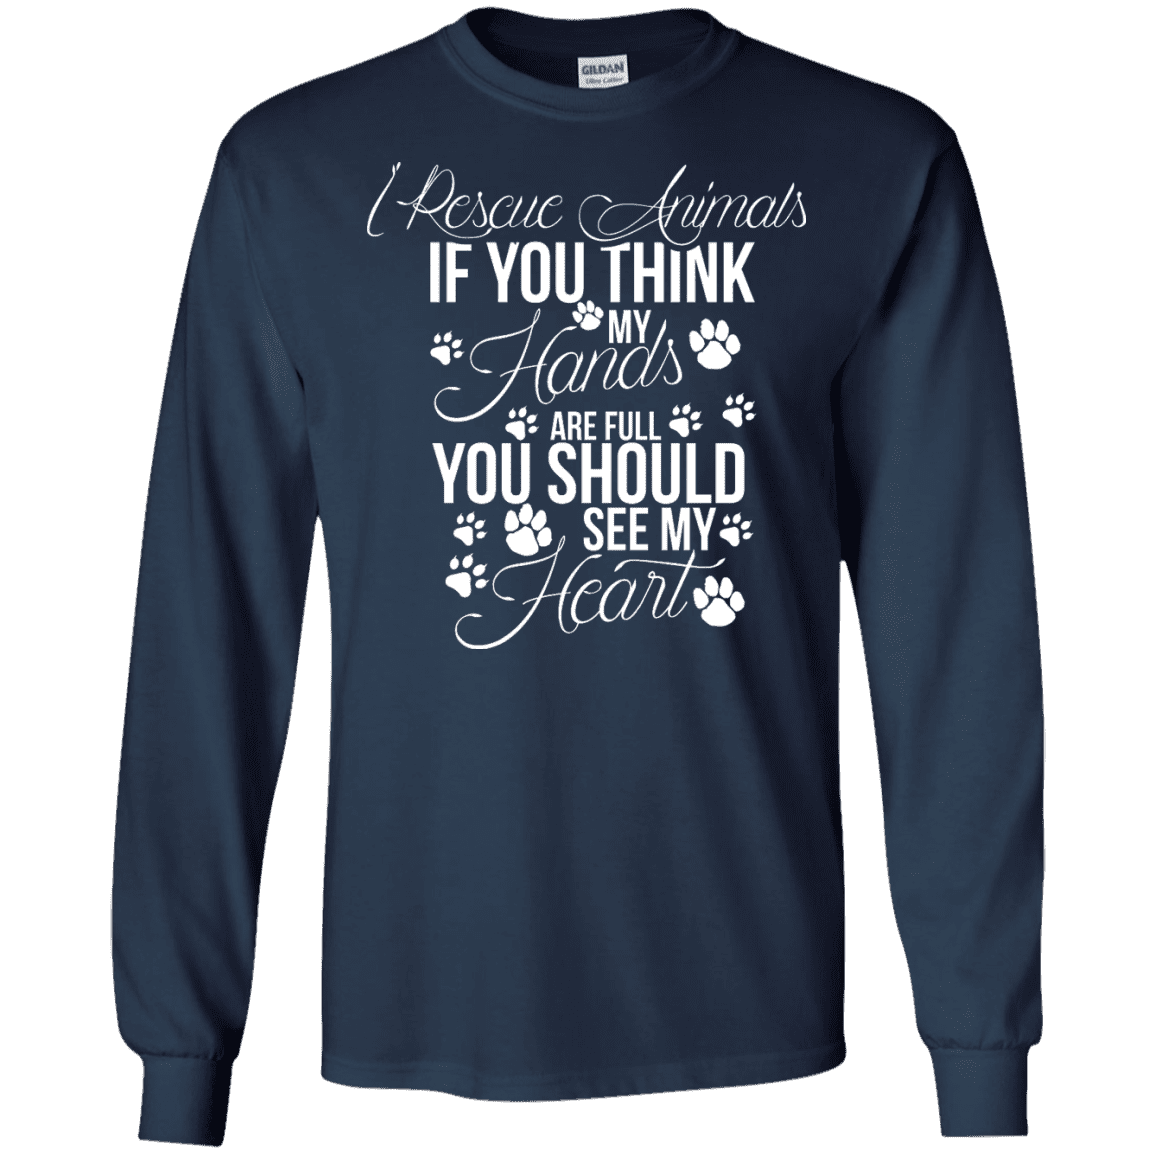 I Rescue Animals - Long Sleeve T Shirt.